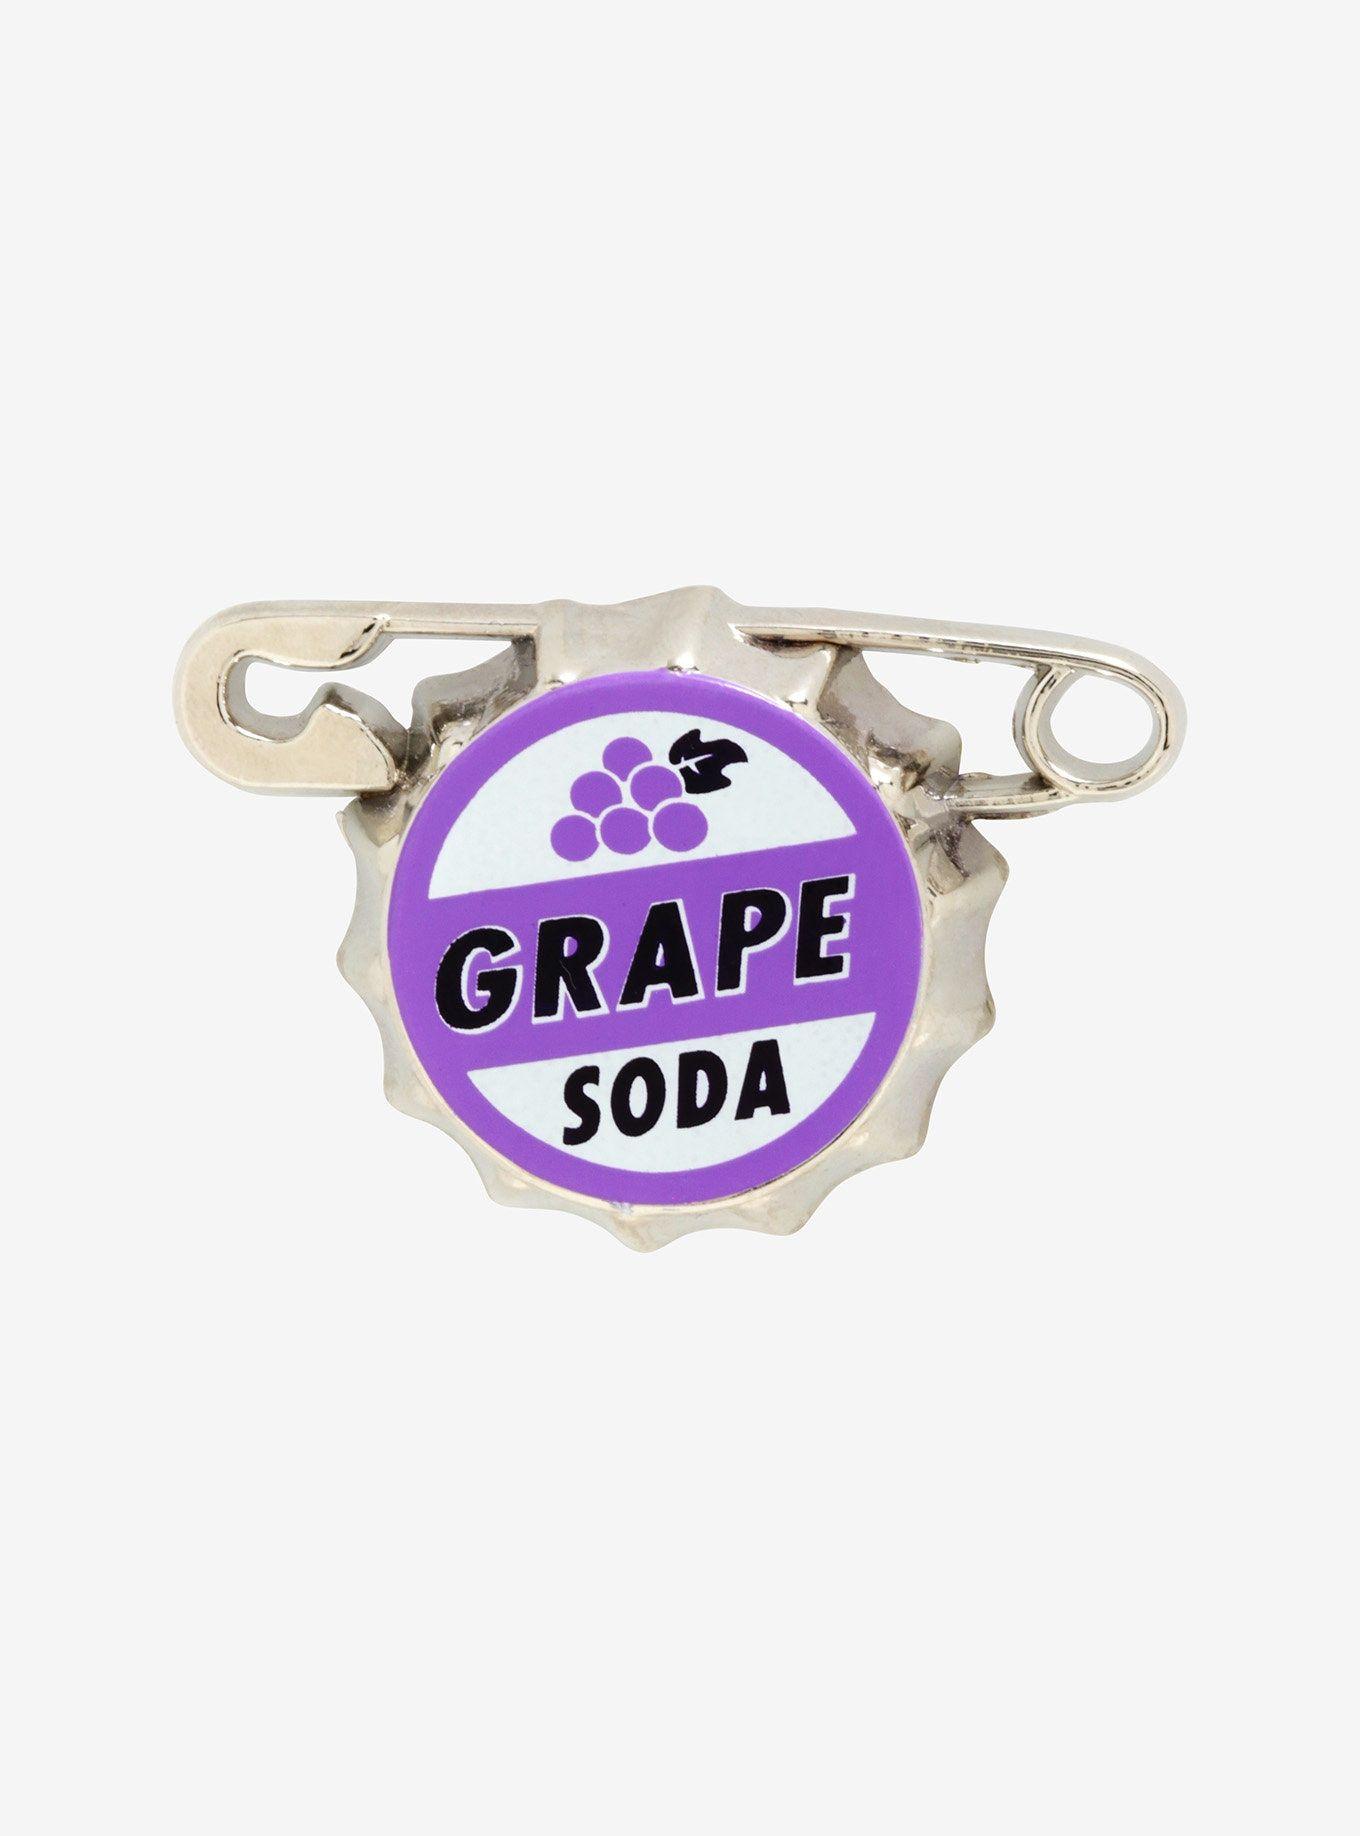 Disney Pixar Up Logo - Disney Pixar Up Grape Soda Enamel Pin - BoxLunch Exclusive